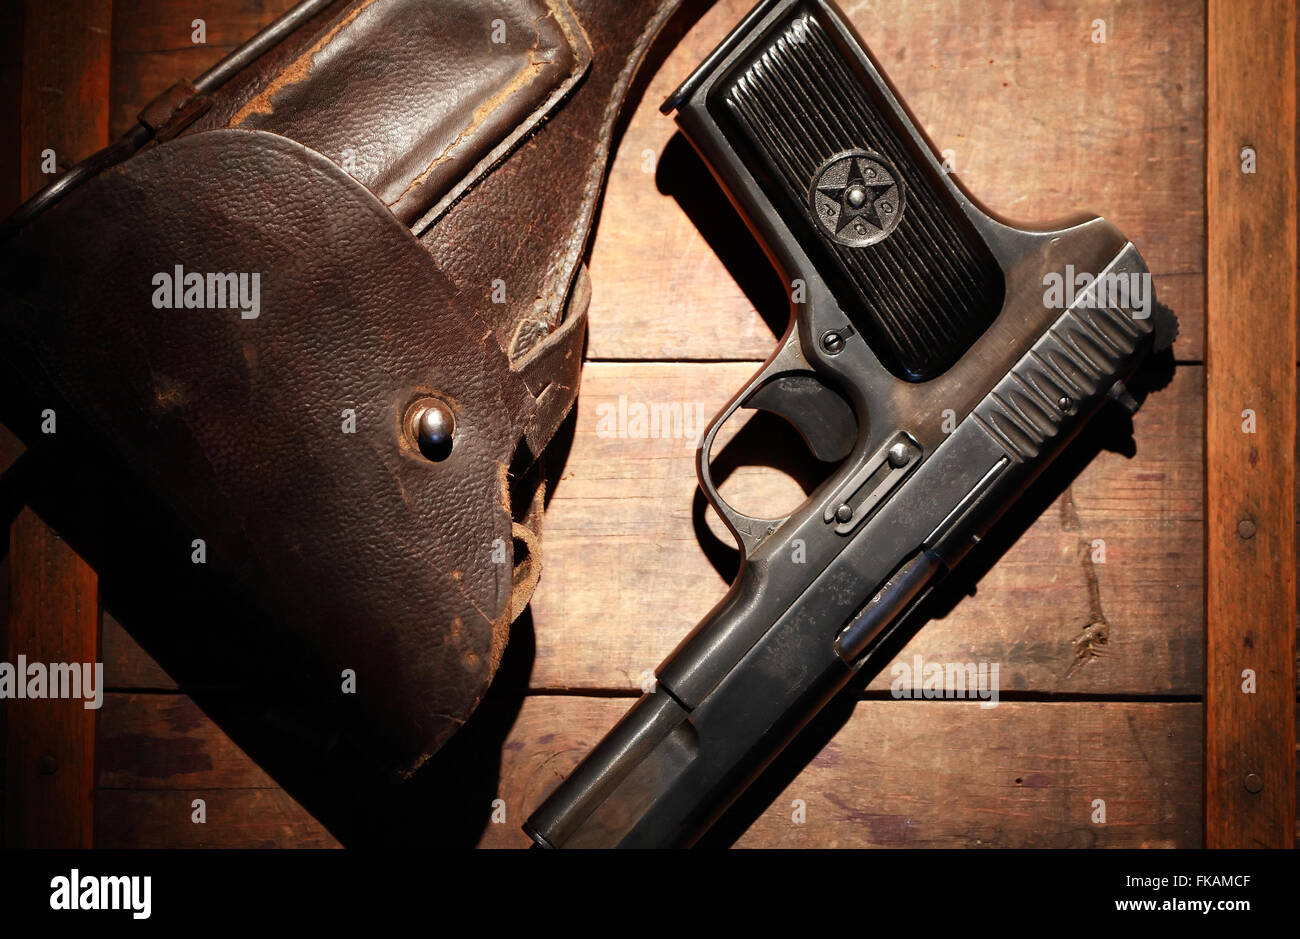 World War II Soviet equipment. Leather handgun holster and pistol on wooden board Stock Photo